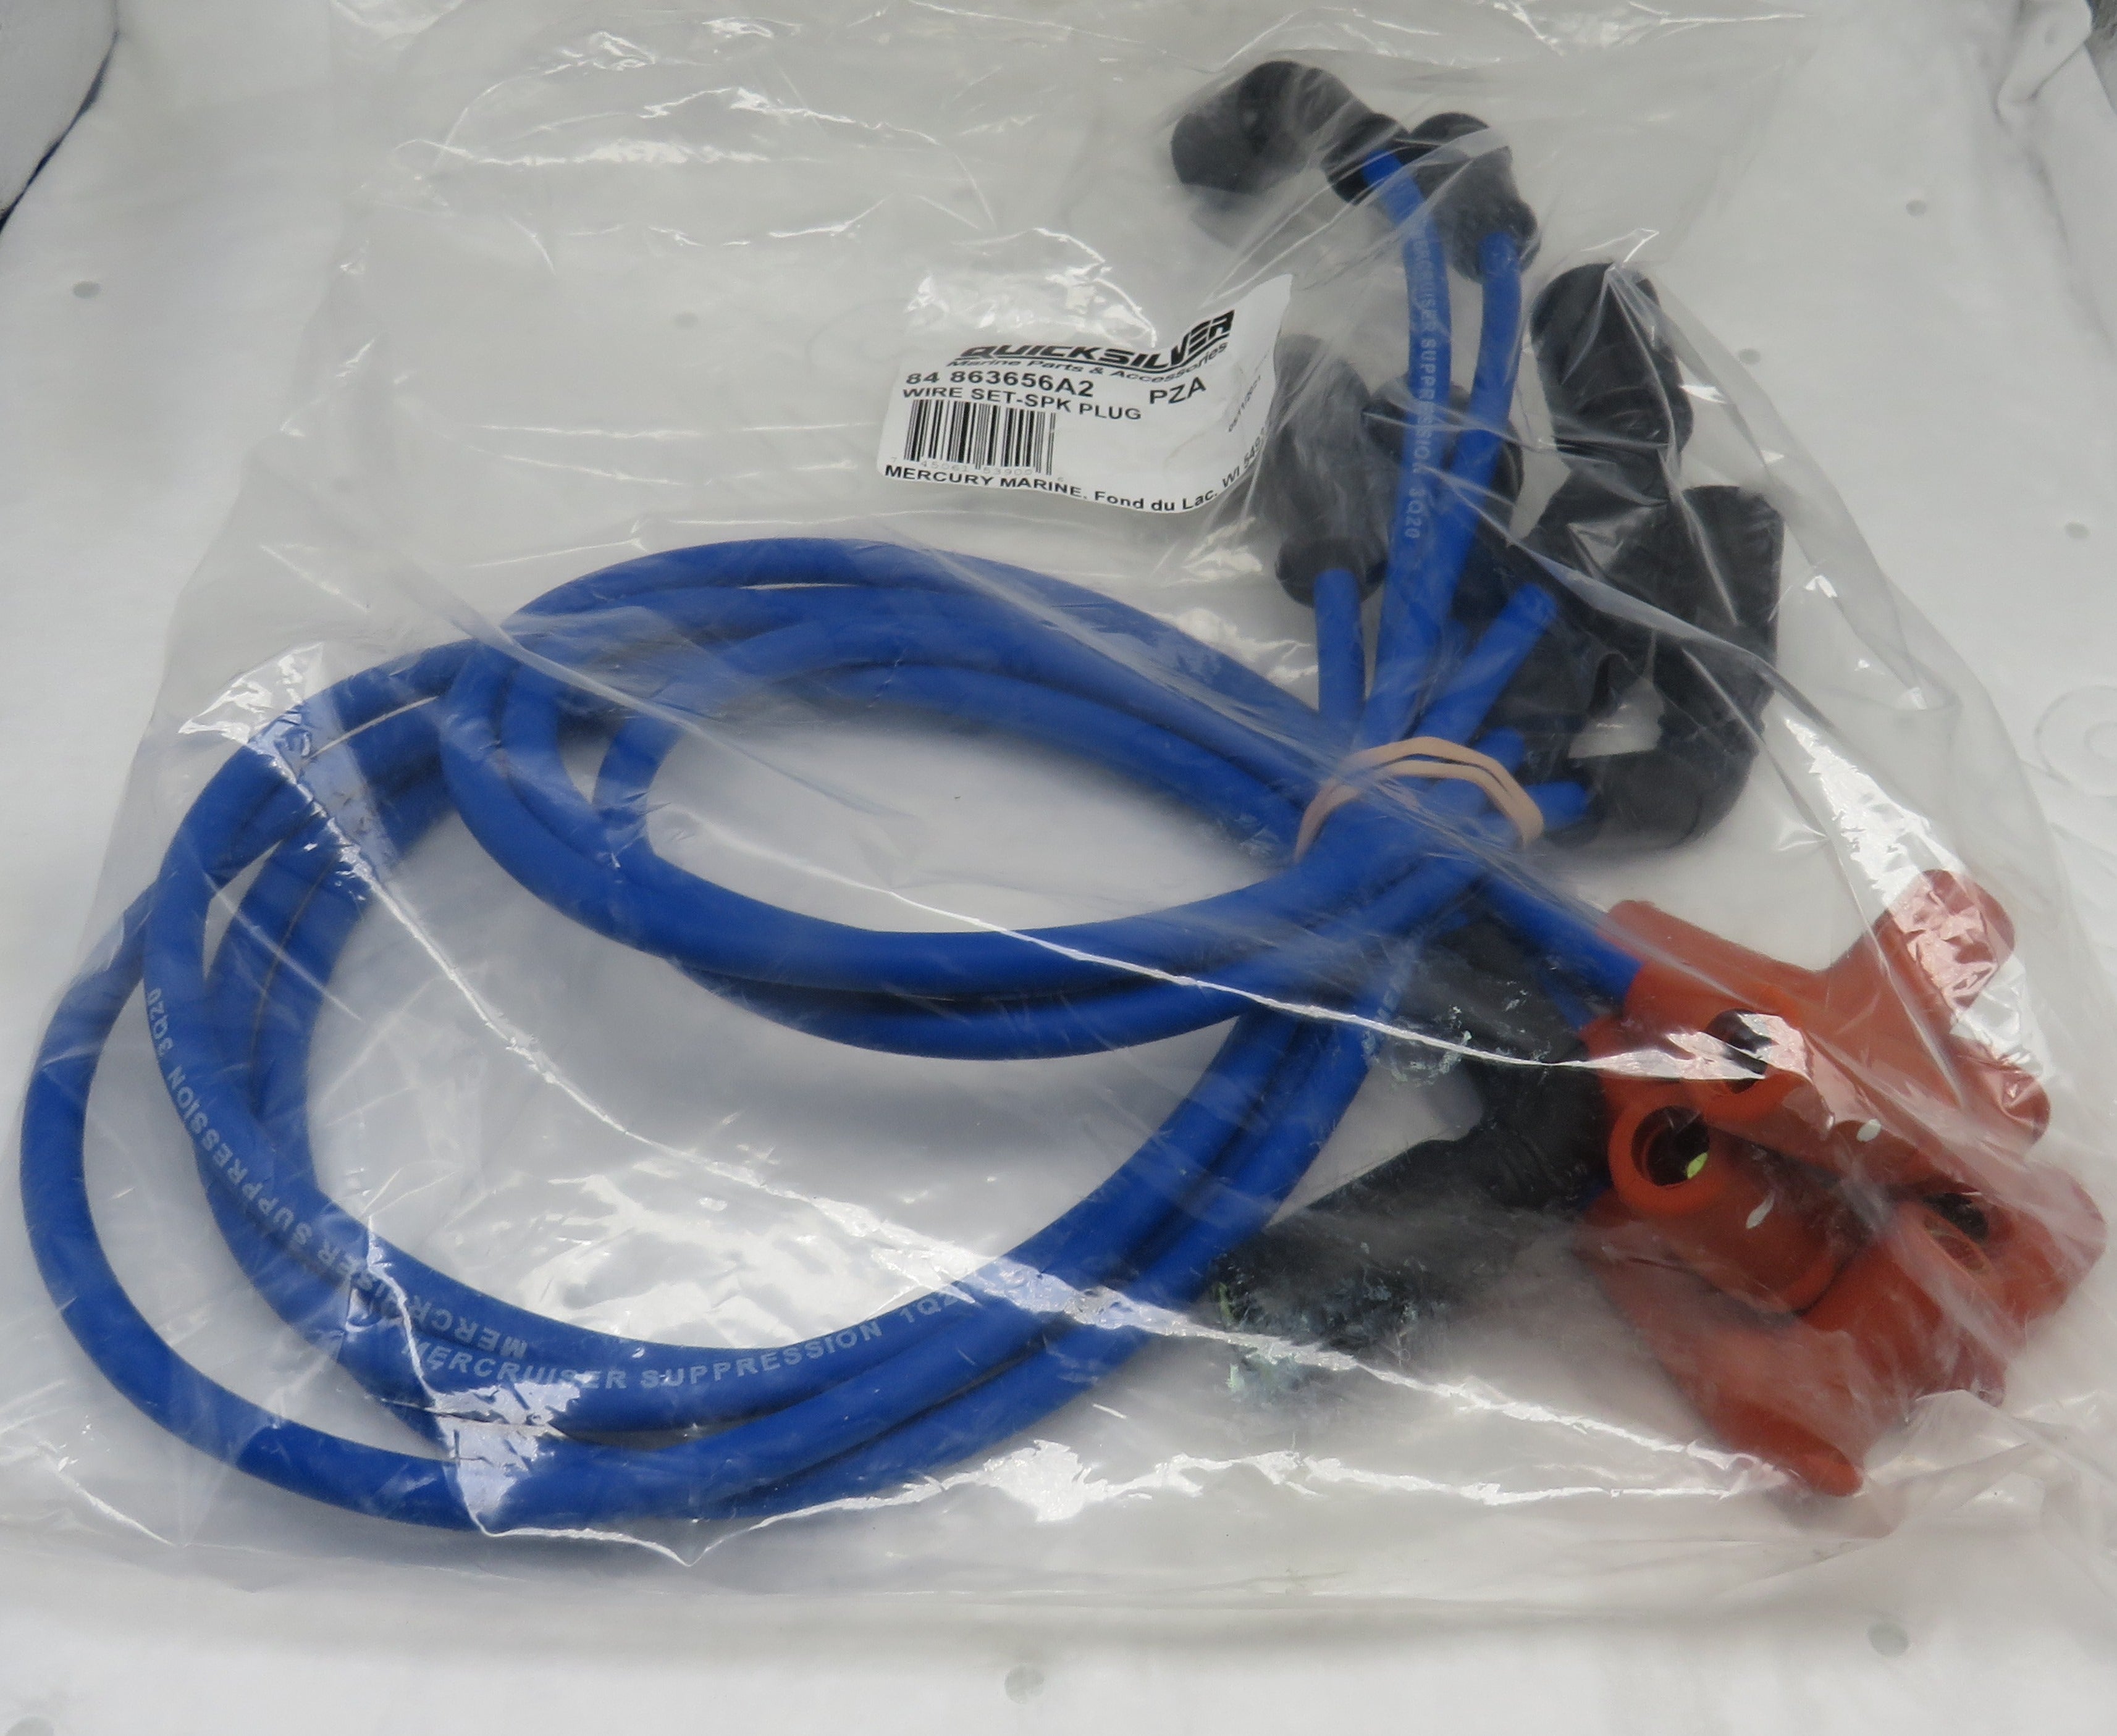 84-863656A2 QuickSilver Spark Plug Wire Set